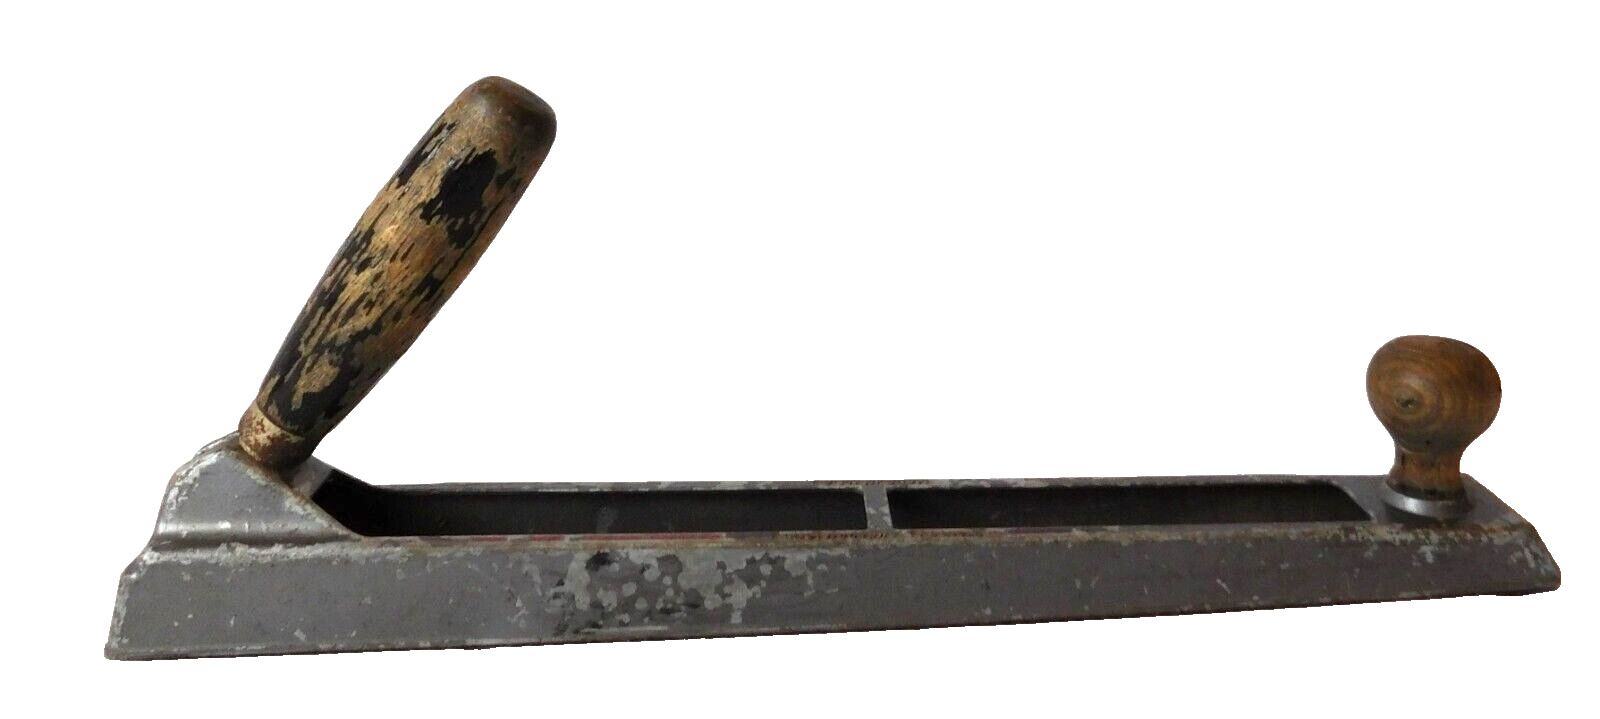 VTG Stanley Surform Shaver Rasp Plane Tool  No.  1485  Wood  14” Wood Handles